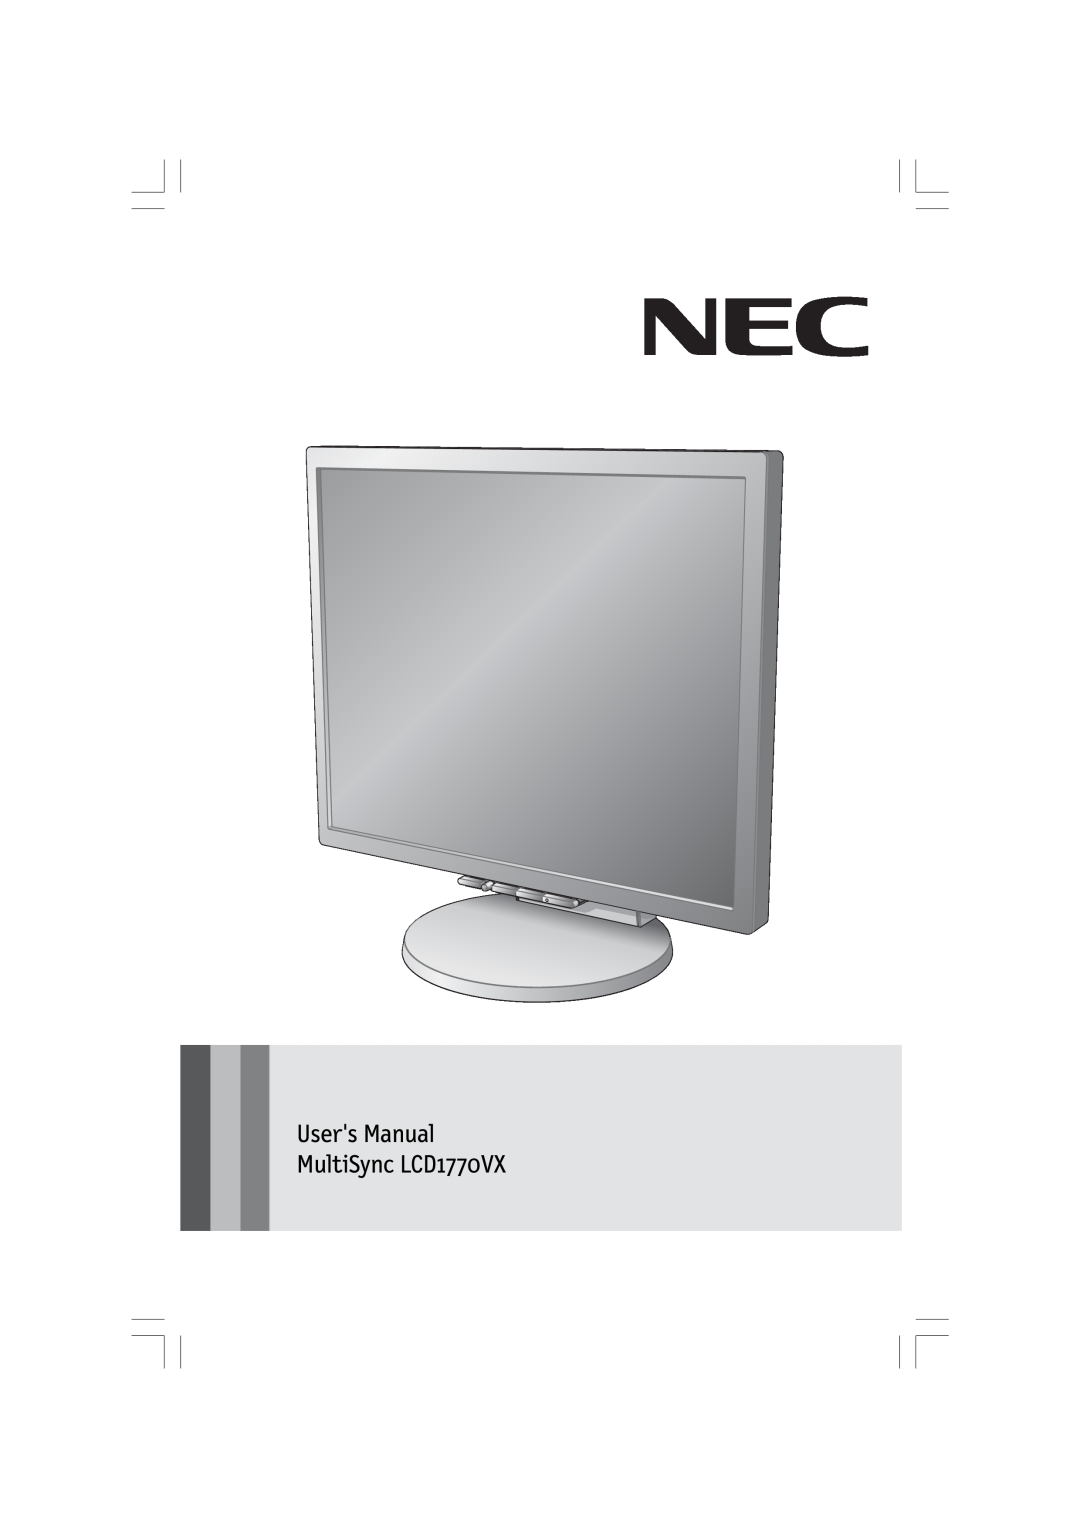 NEC LCD1770VX user manual 